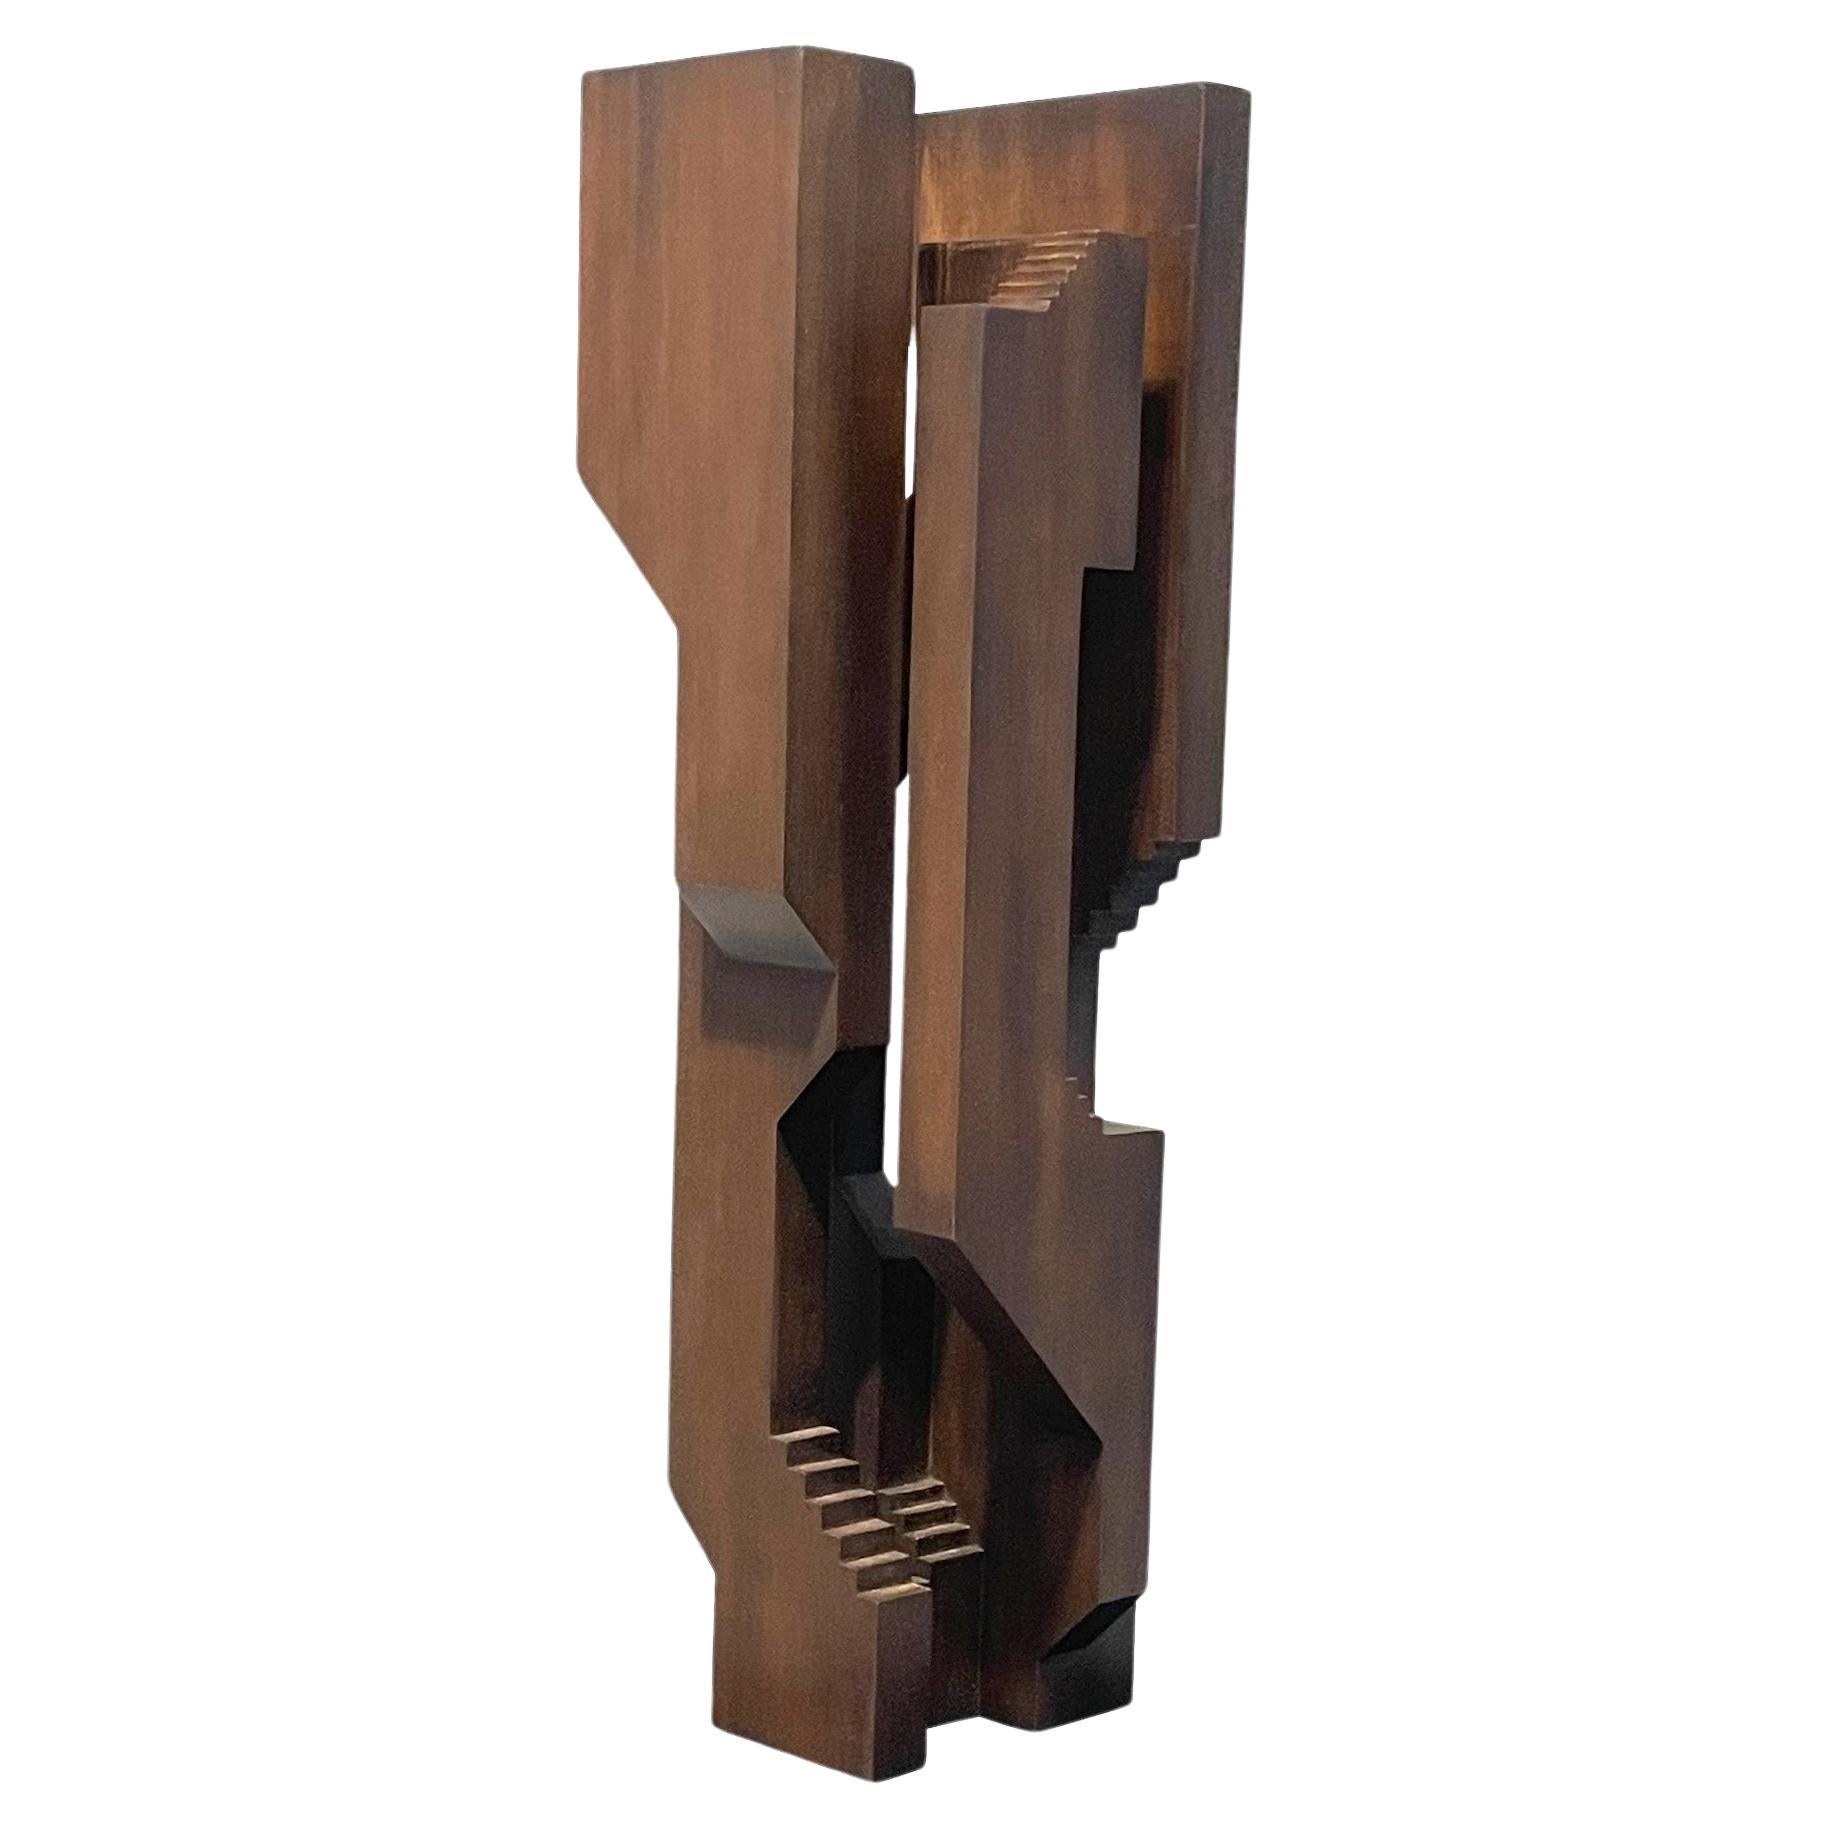 Espresso Brown Wooden Abstract Sculpture By David Umemoto, Canada, Contemporary  For Sale